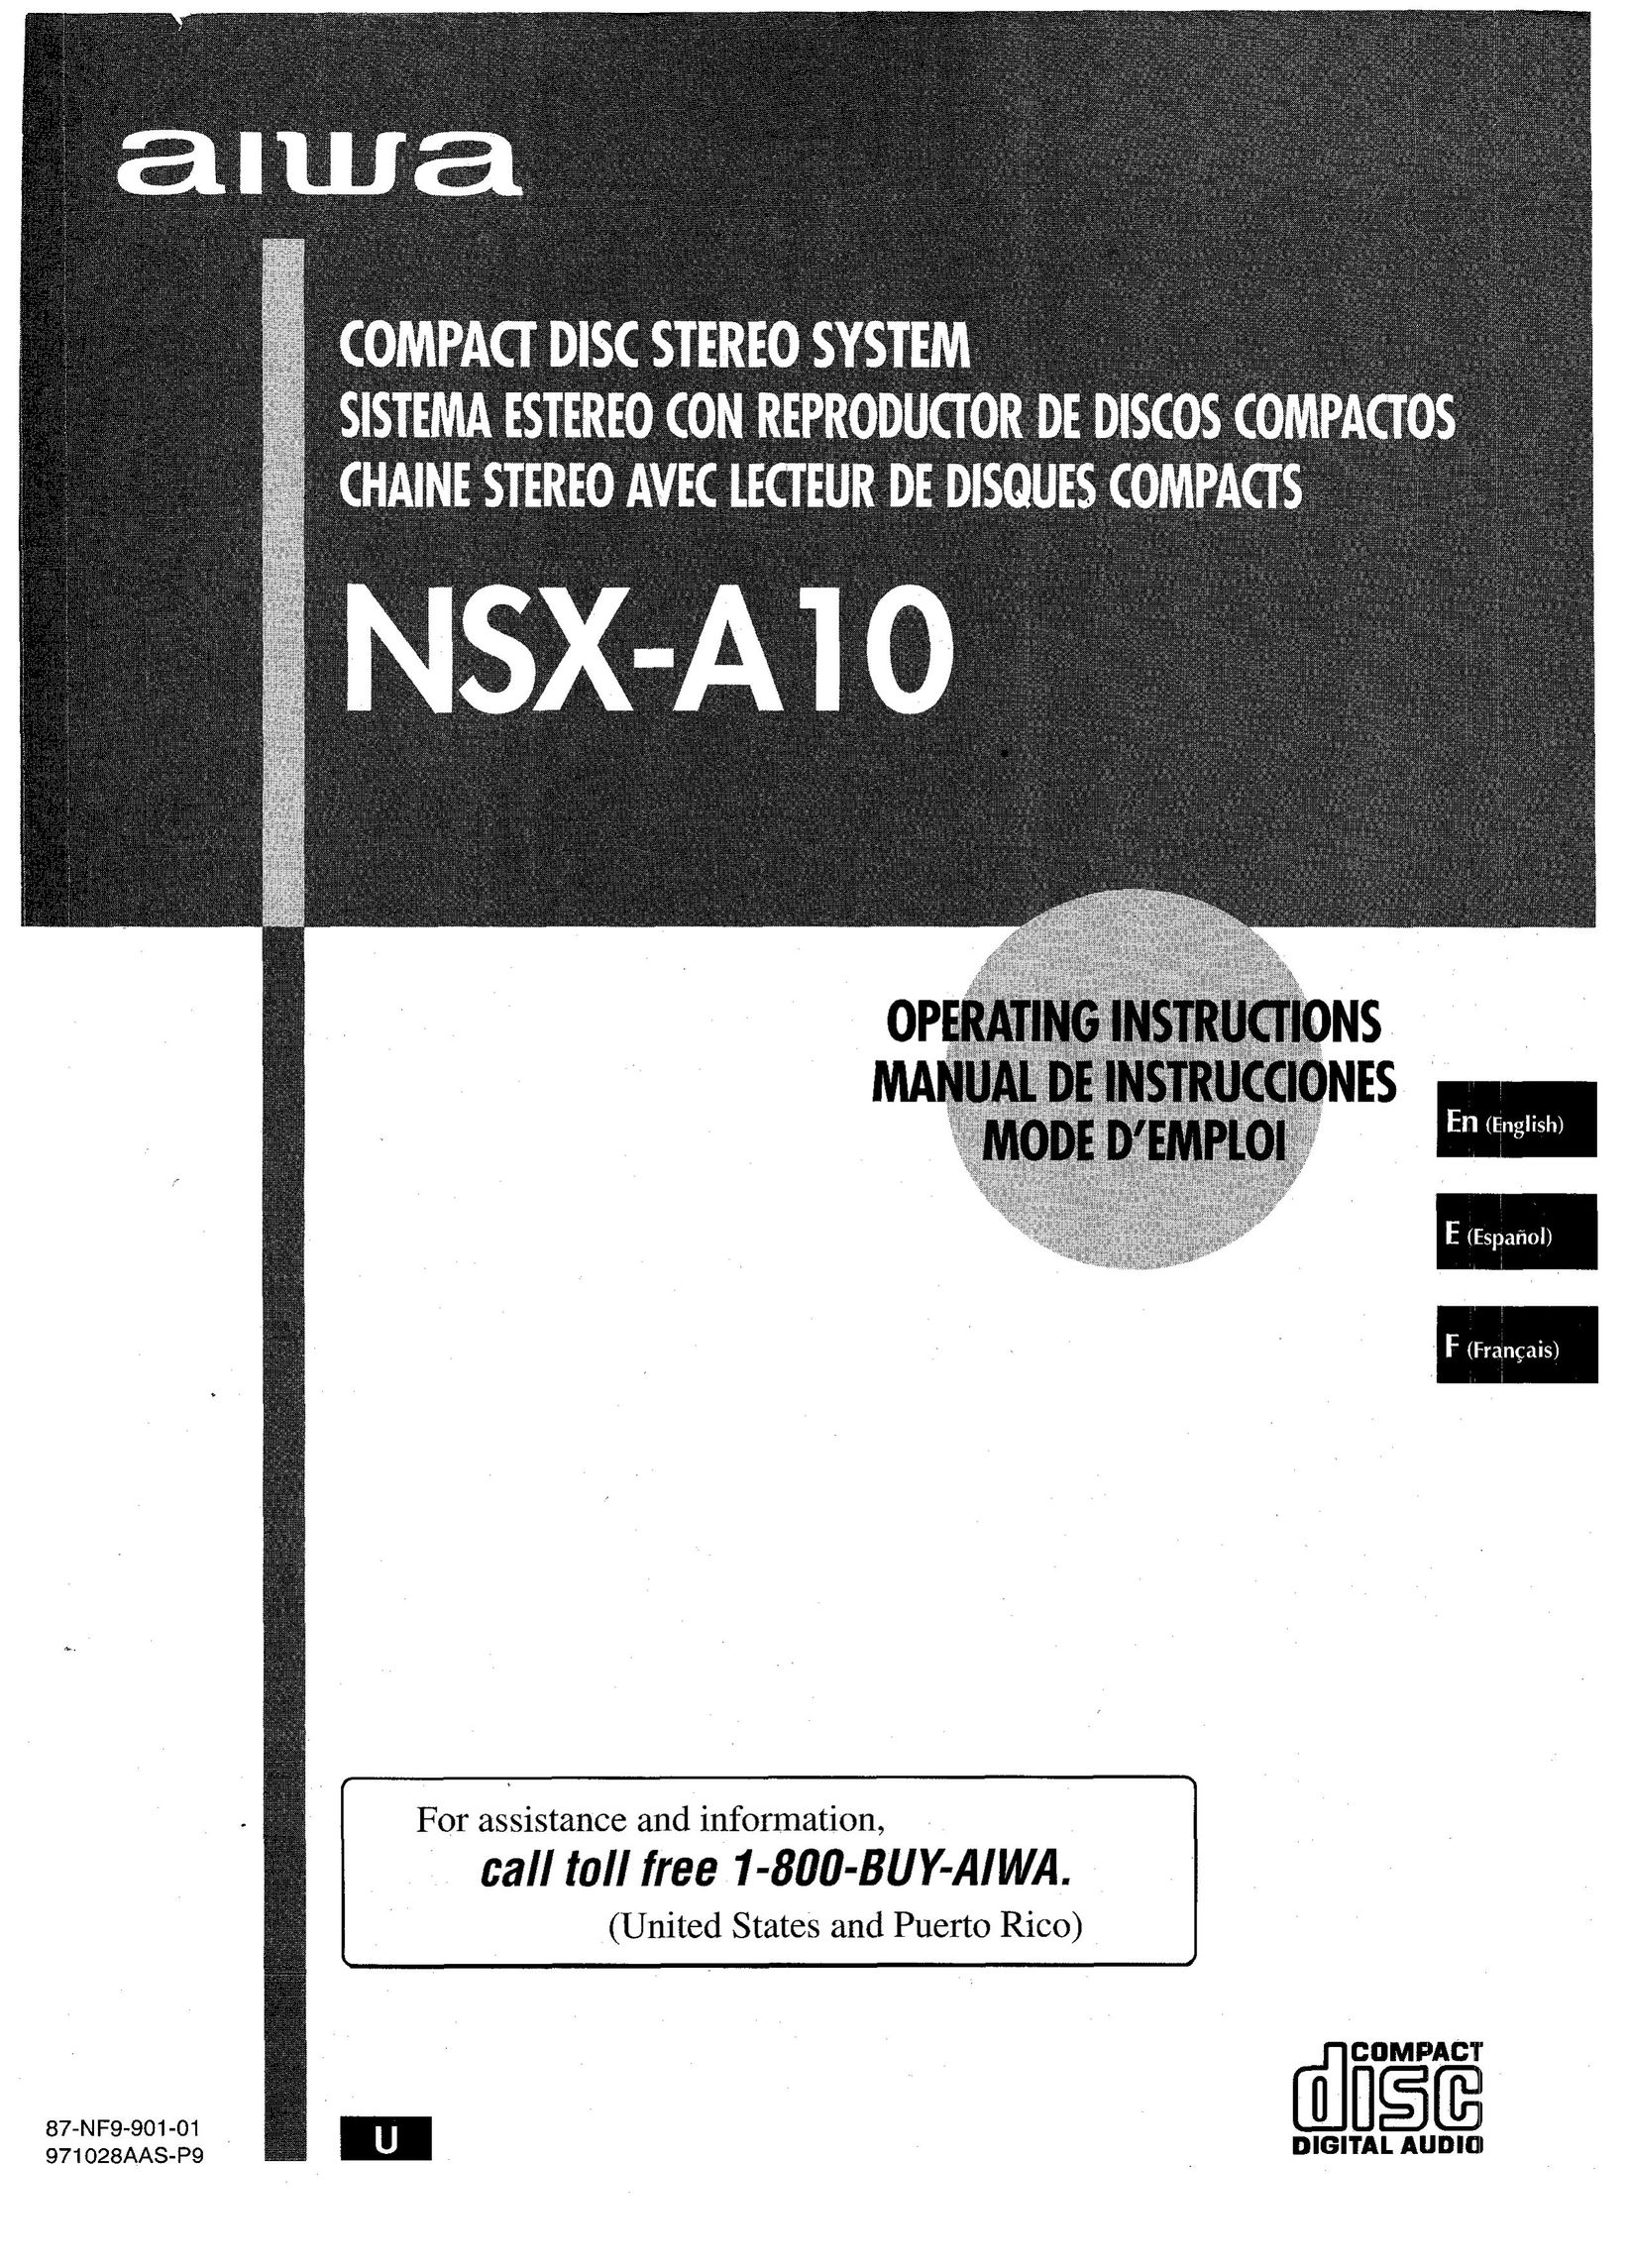 Aiwa NSX-A10 CD Player User Manual (Page 1)